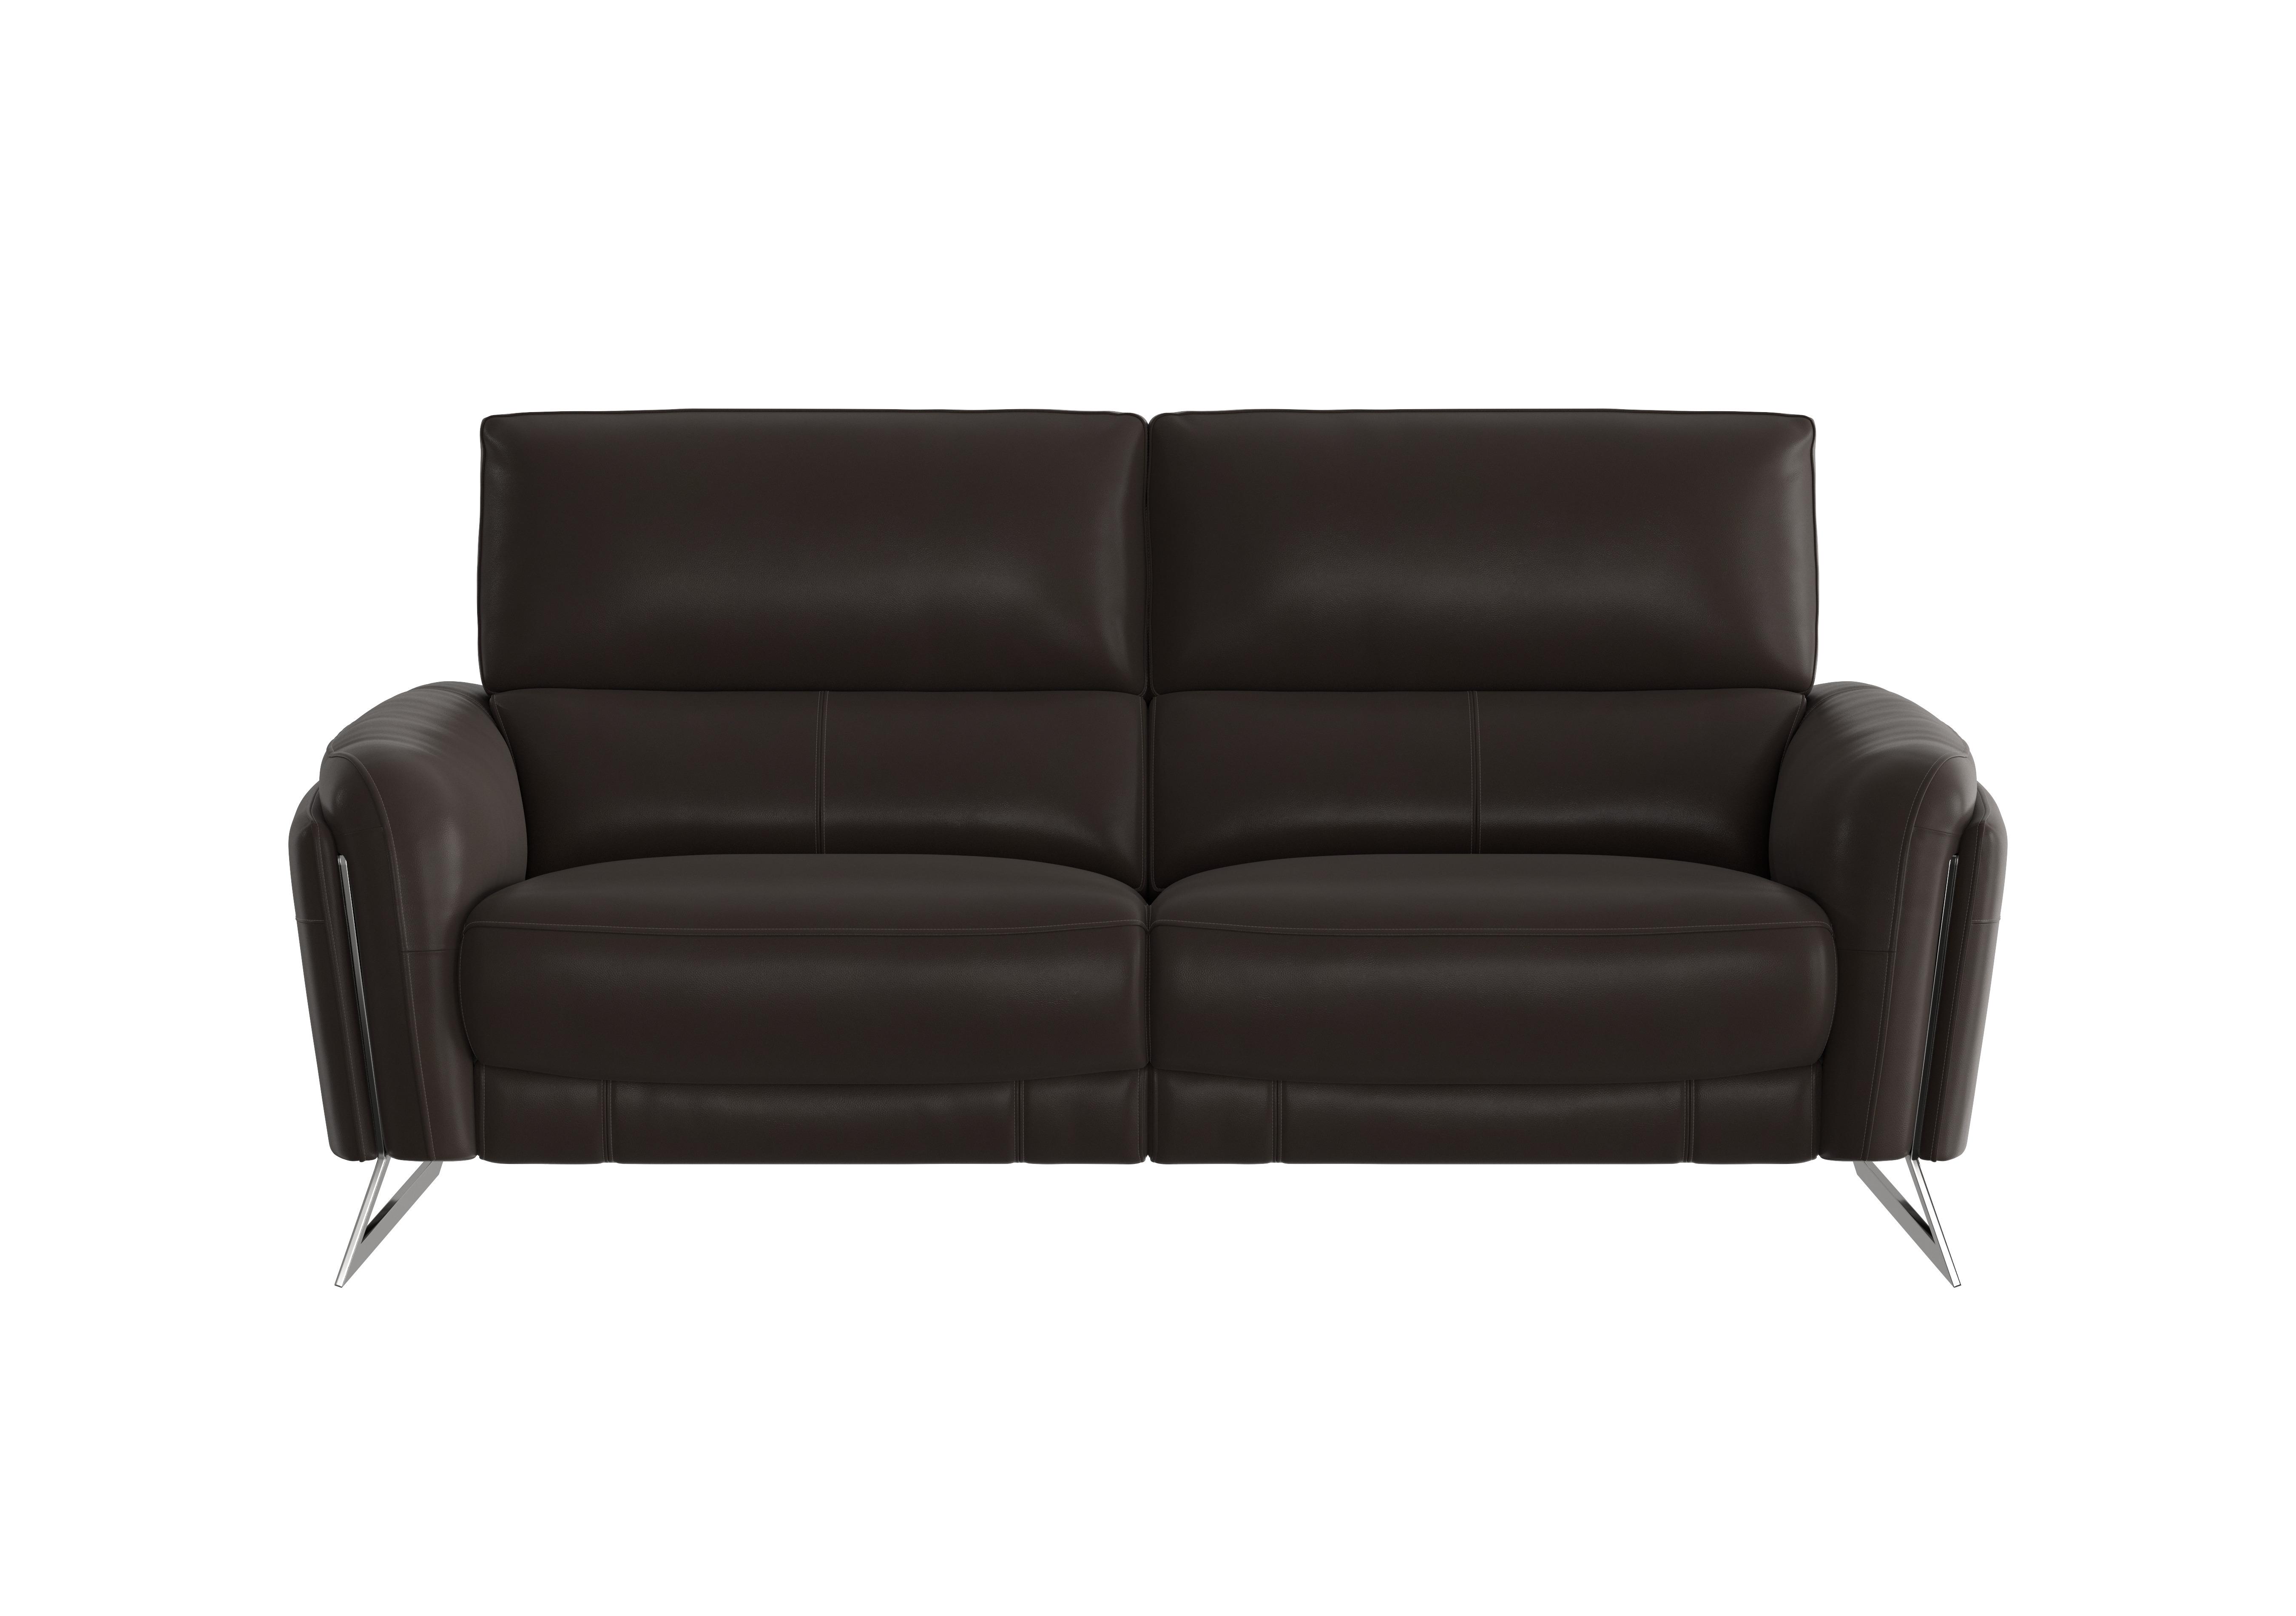 Amarilla 3 Seater Leather Sofa in Bv-1748 Dark Chocolate on Furniture Village